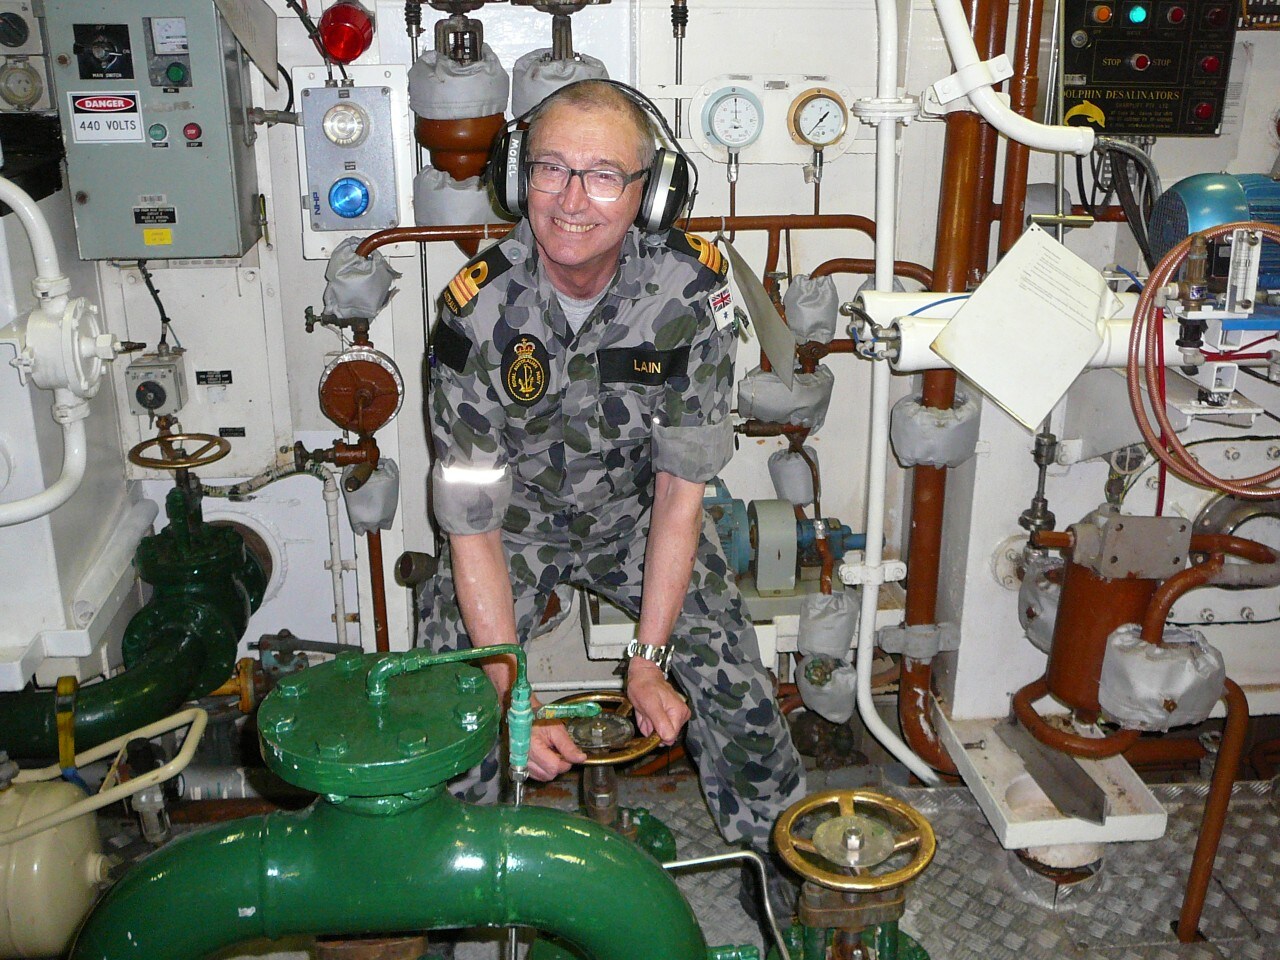 Dr Lain in his Navy uniform